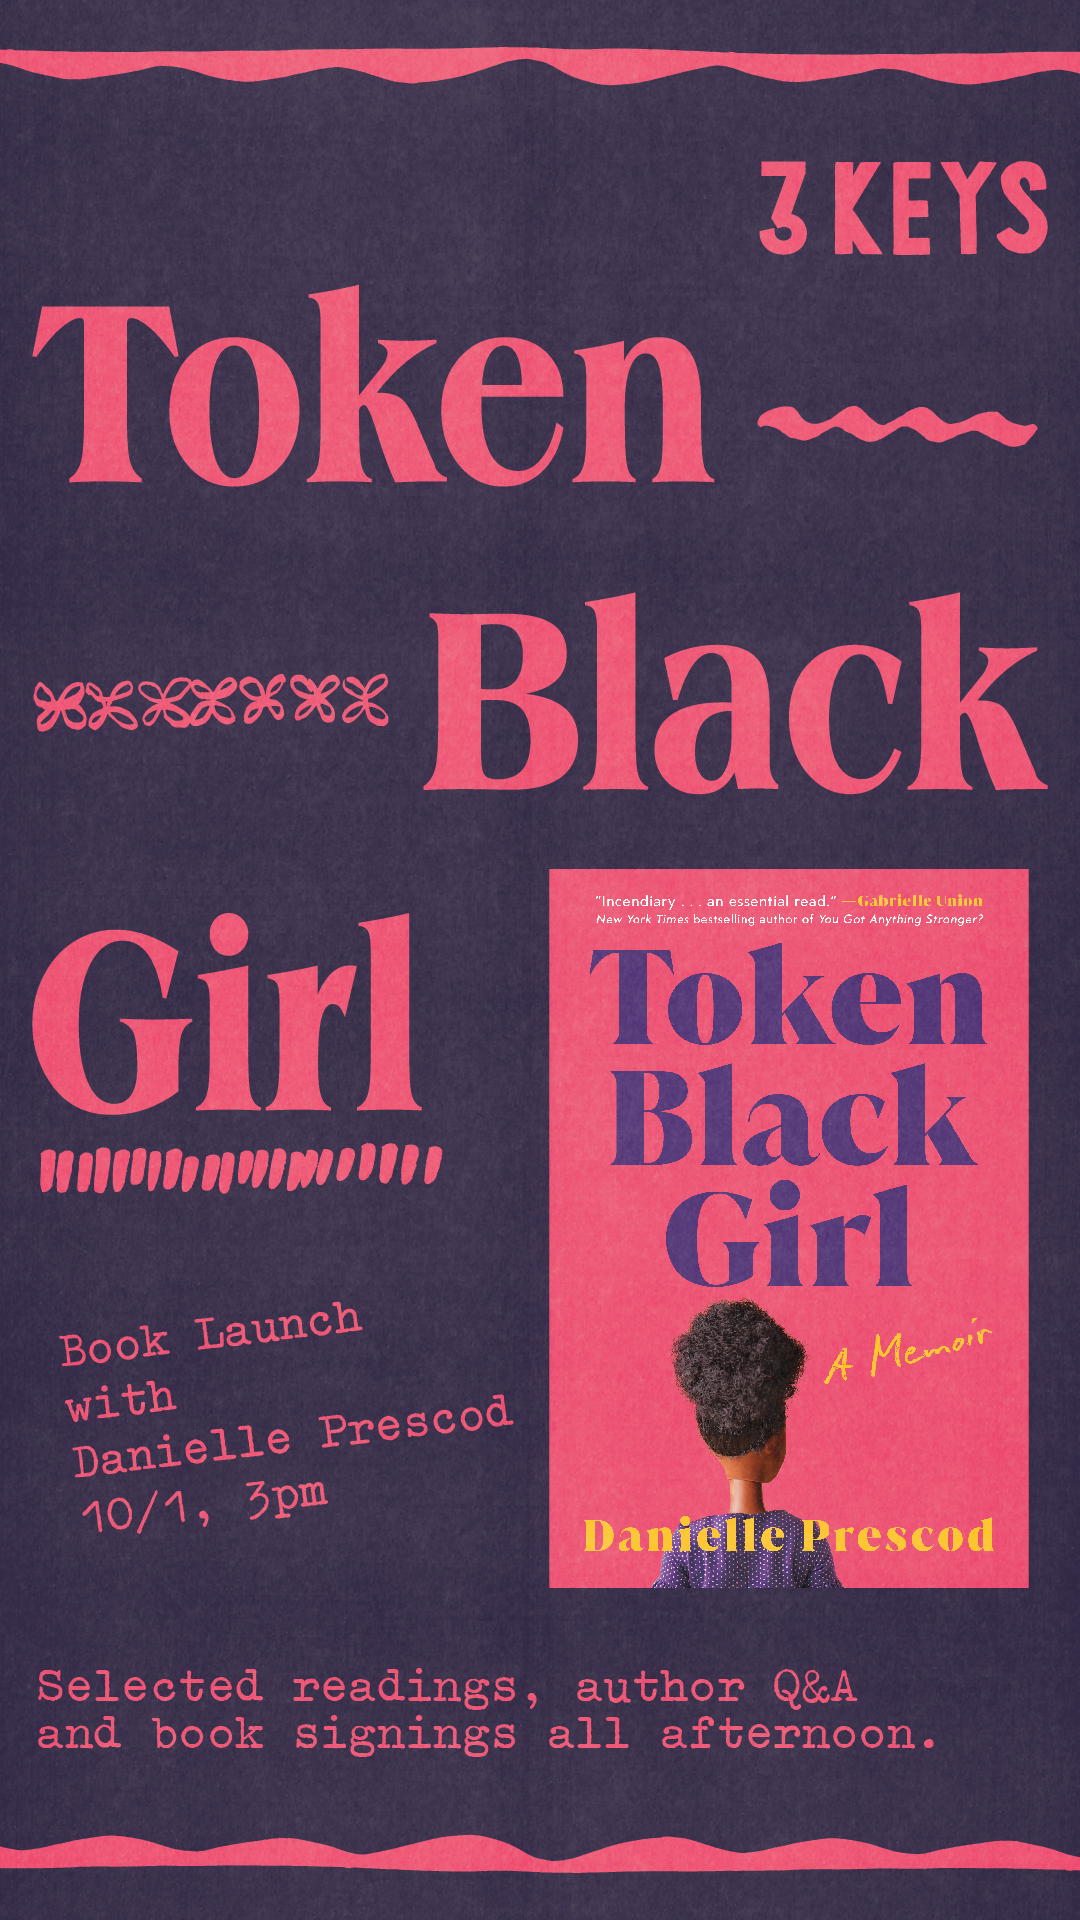 Token Black Girl Book Release with Danielle Prescod promo